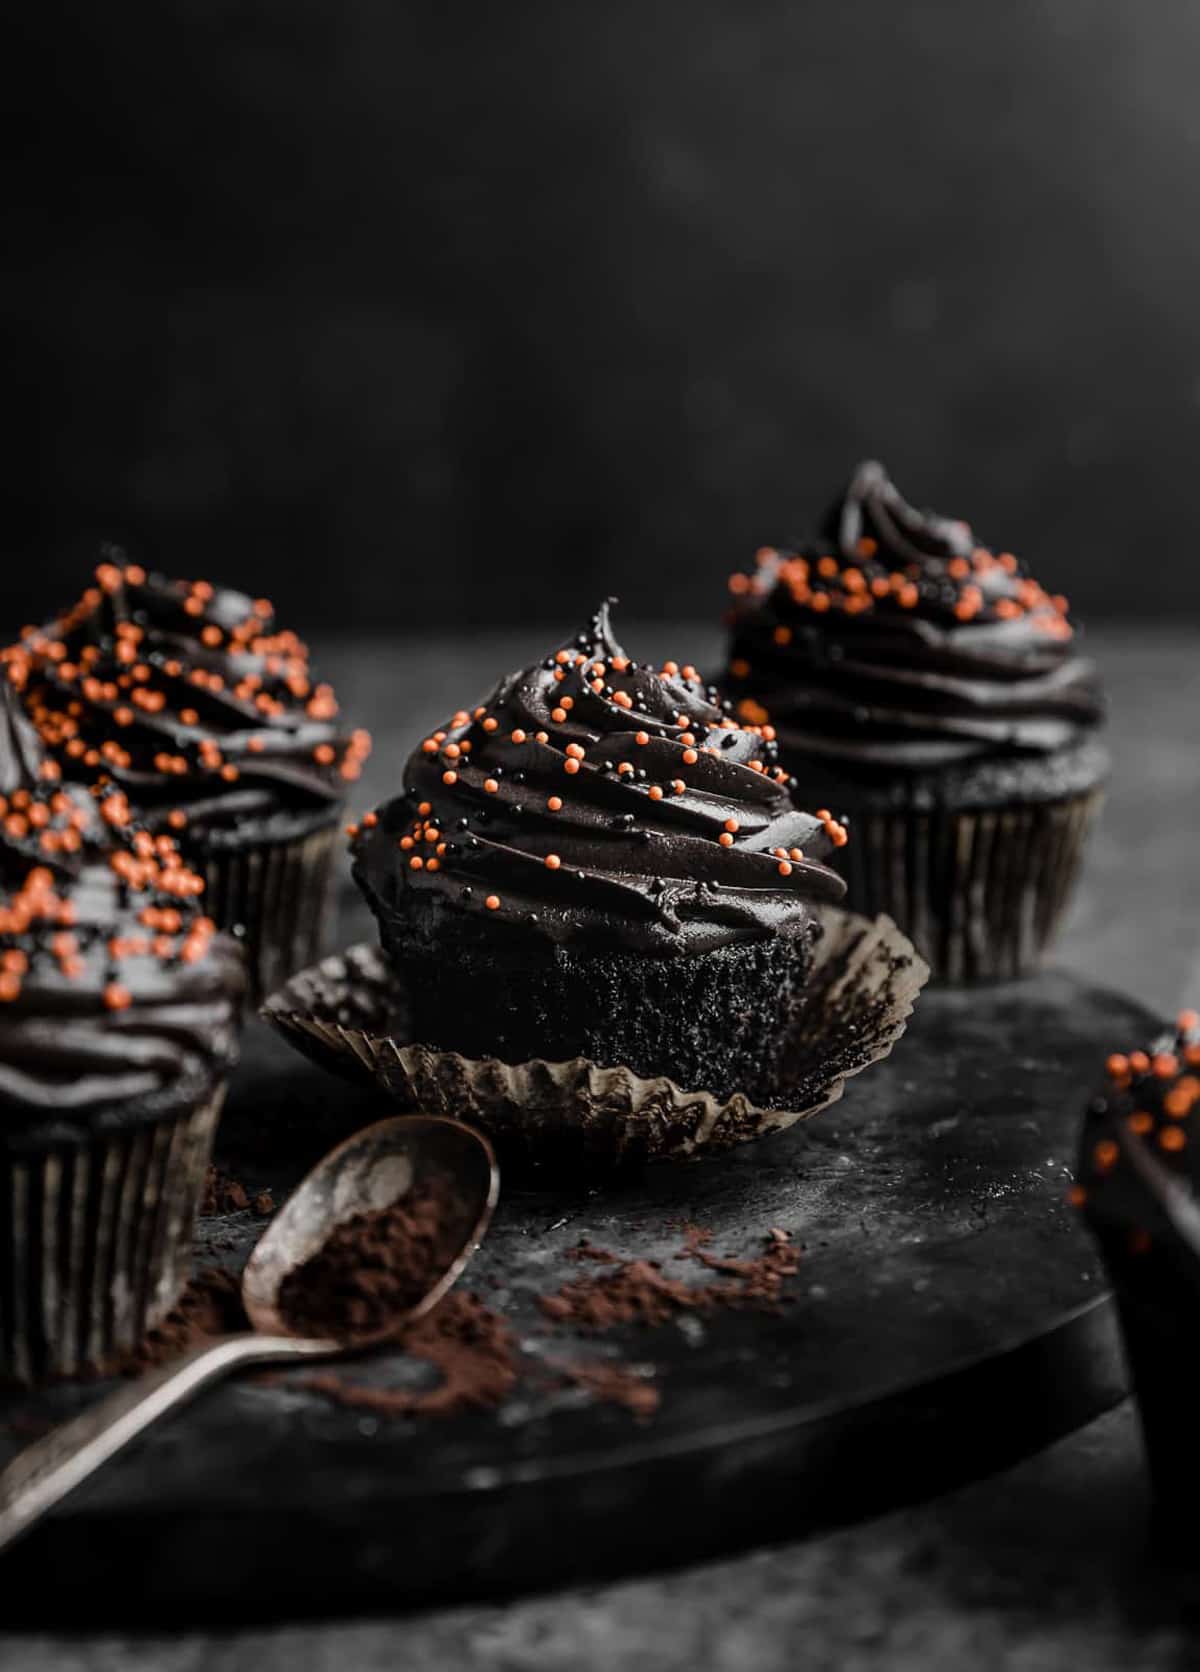 Black Velvet Cupcakes topped with orange sprinkles on a black plate against a black background.